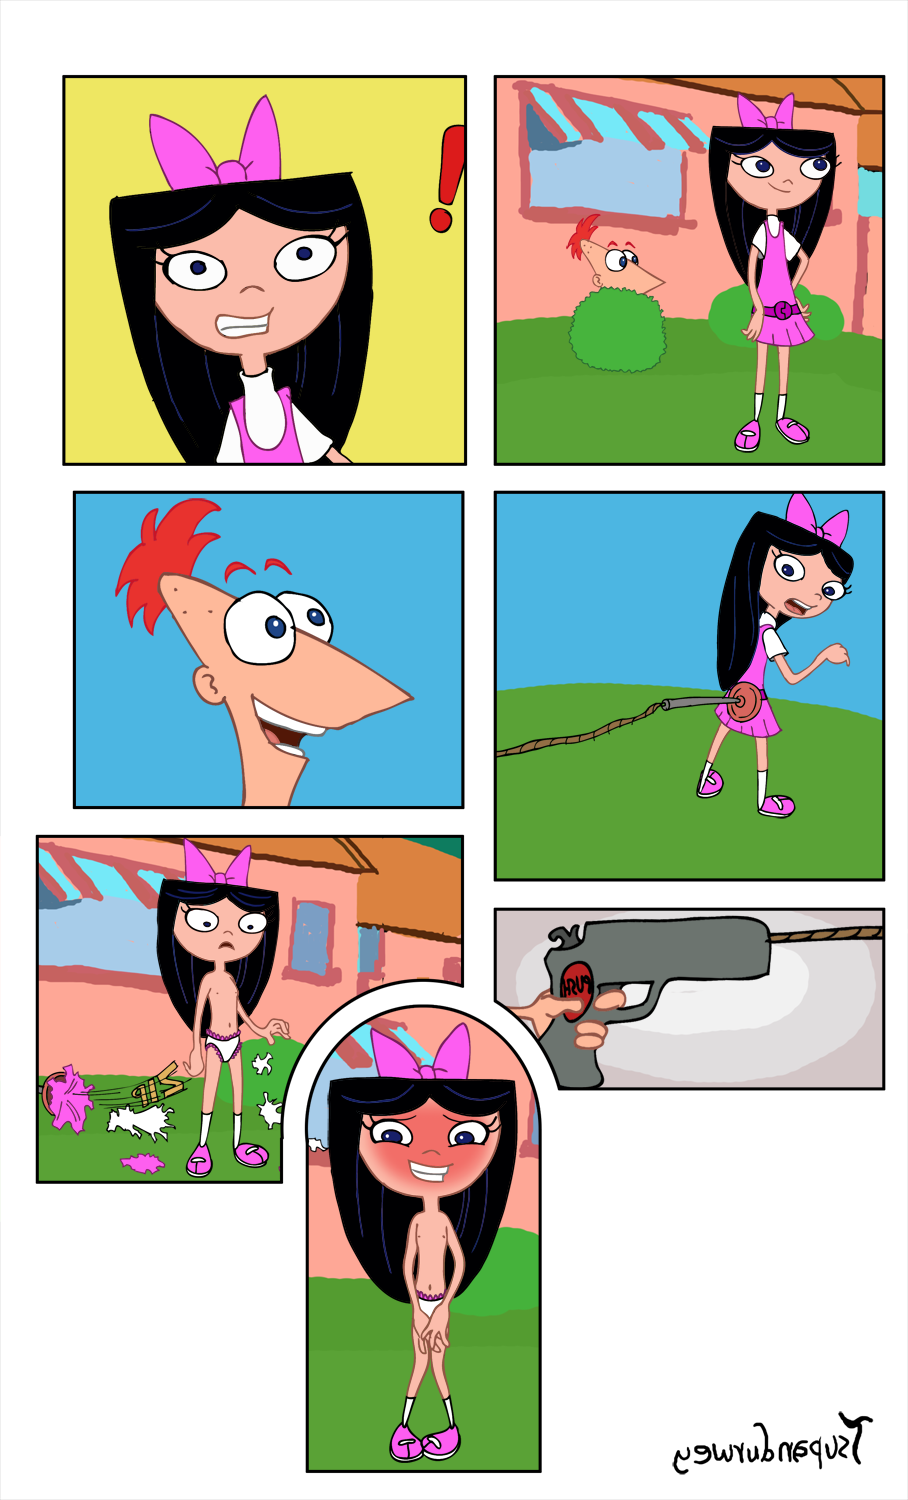 Phineas und isabella porno